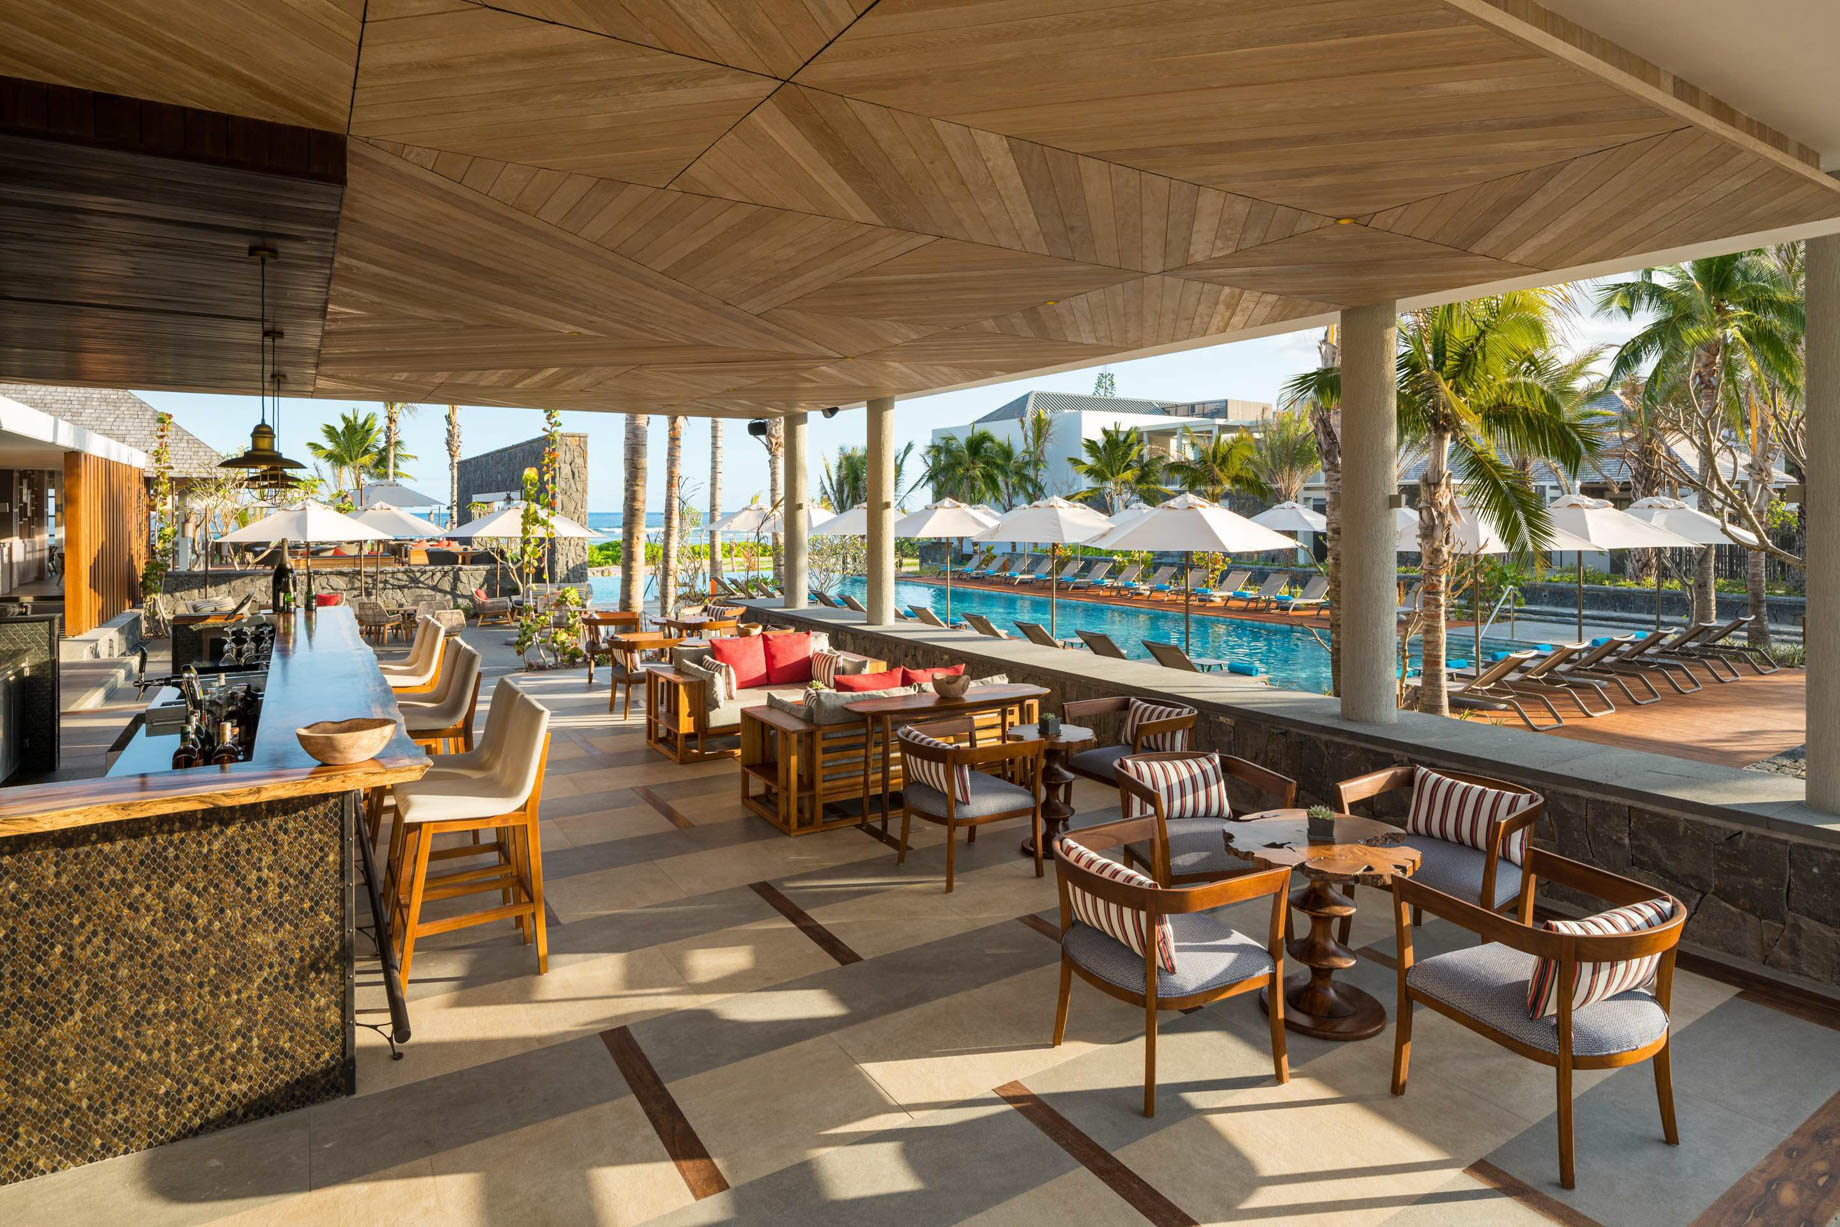 Anantara Iko Mauritius Resort & Villas – Plaine Magnien, Mauritius – Karokan Bar and Restaurant Patio